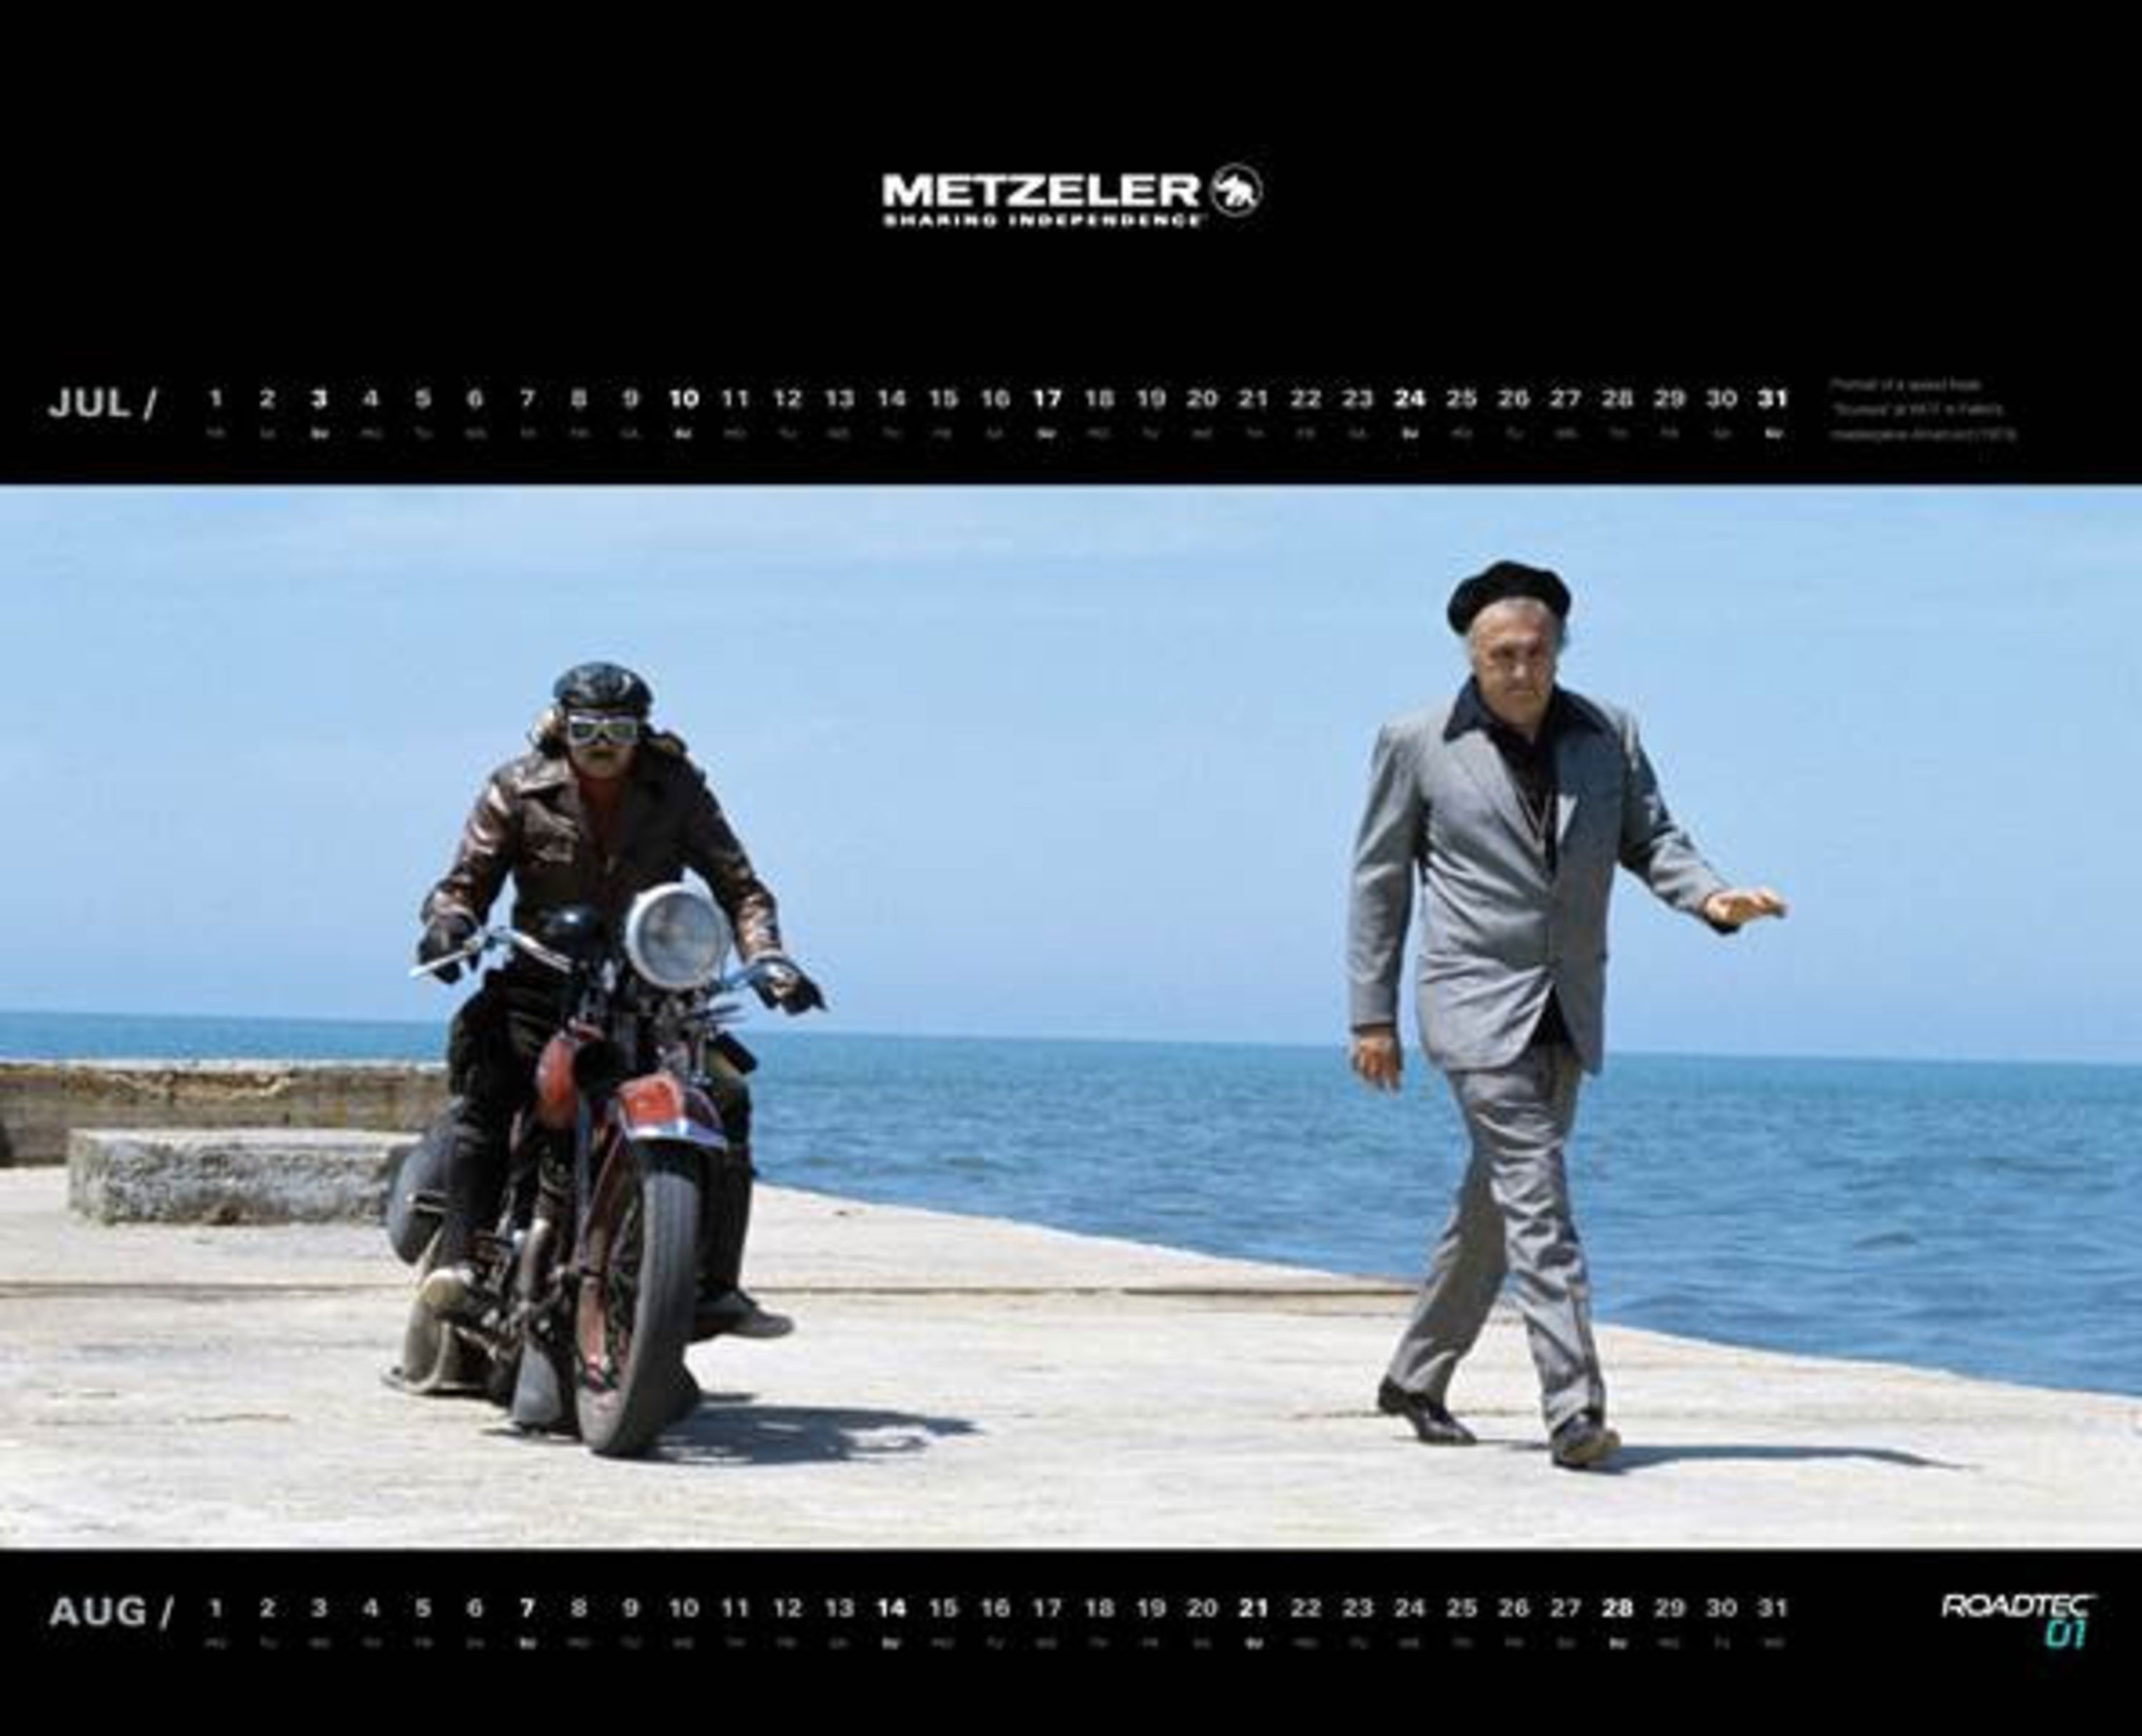 Il calendario Metzeler 2016 celebra le moto nel cinema